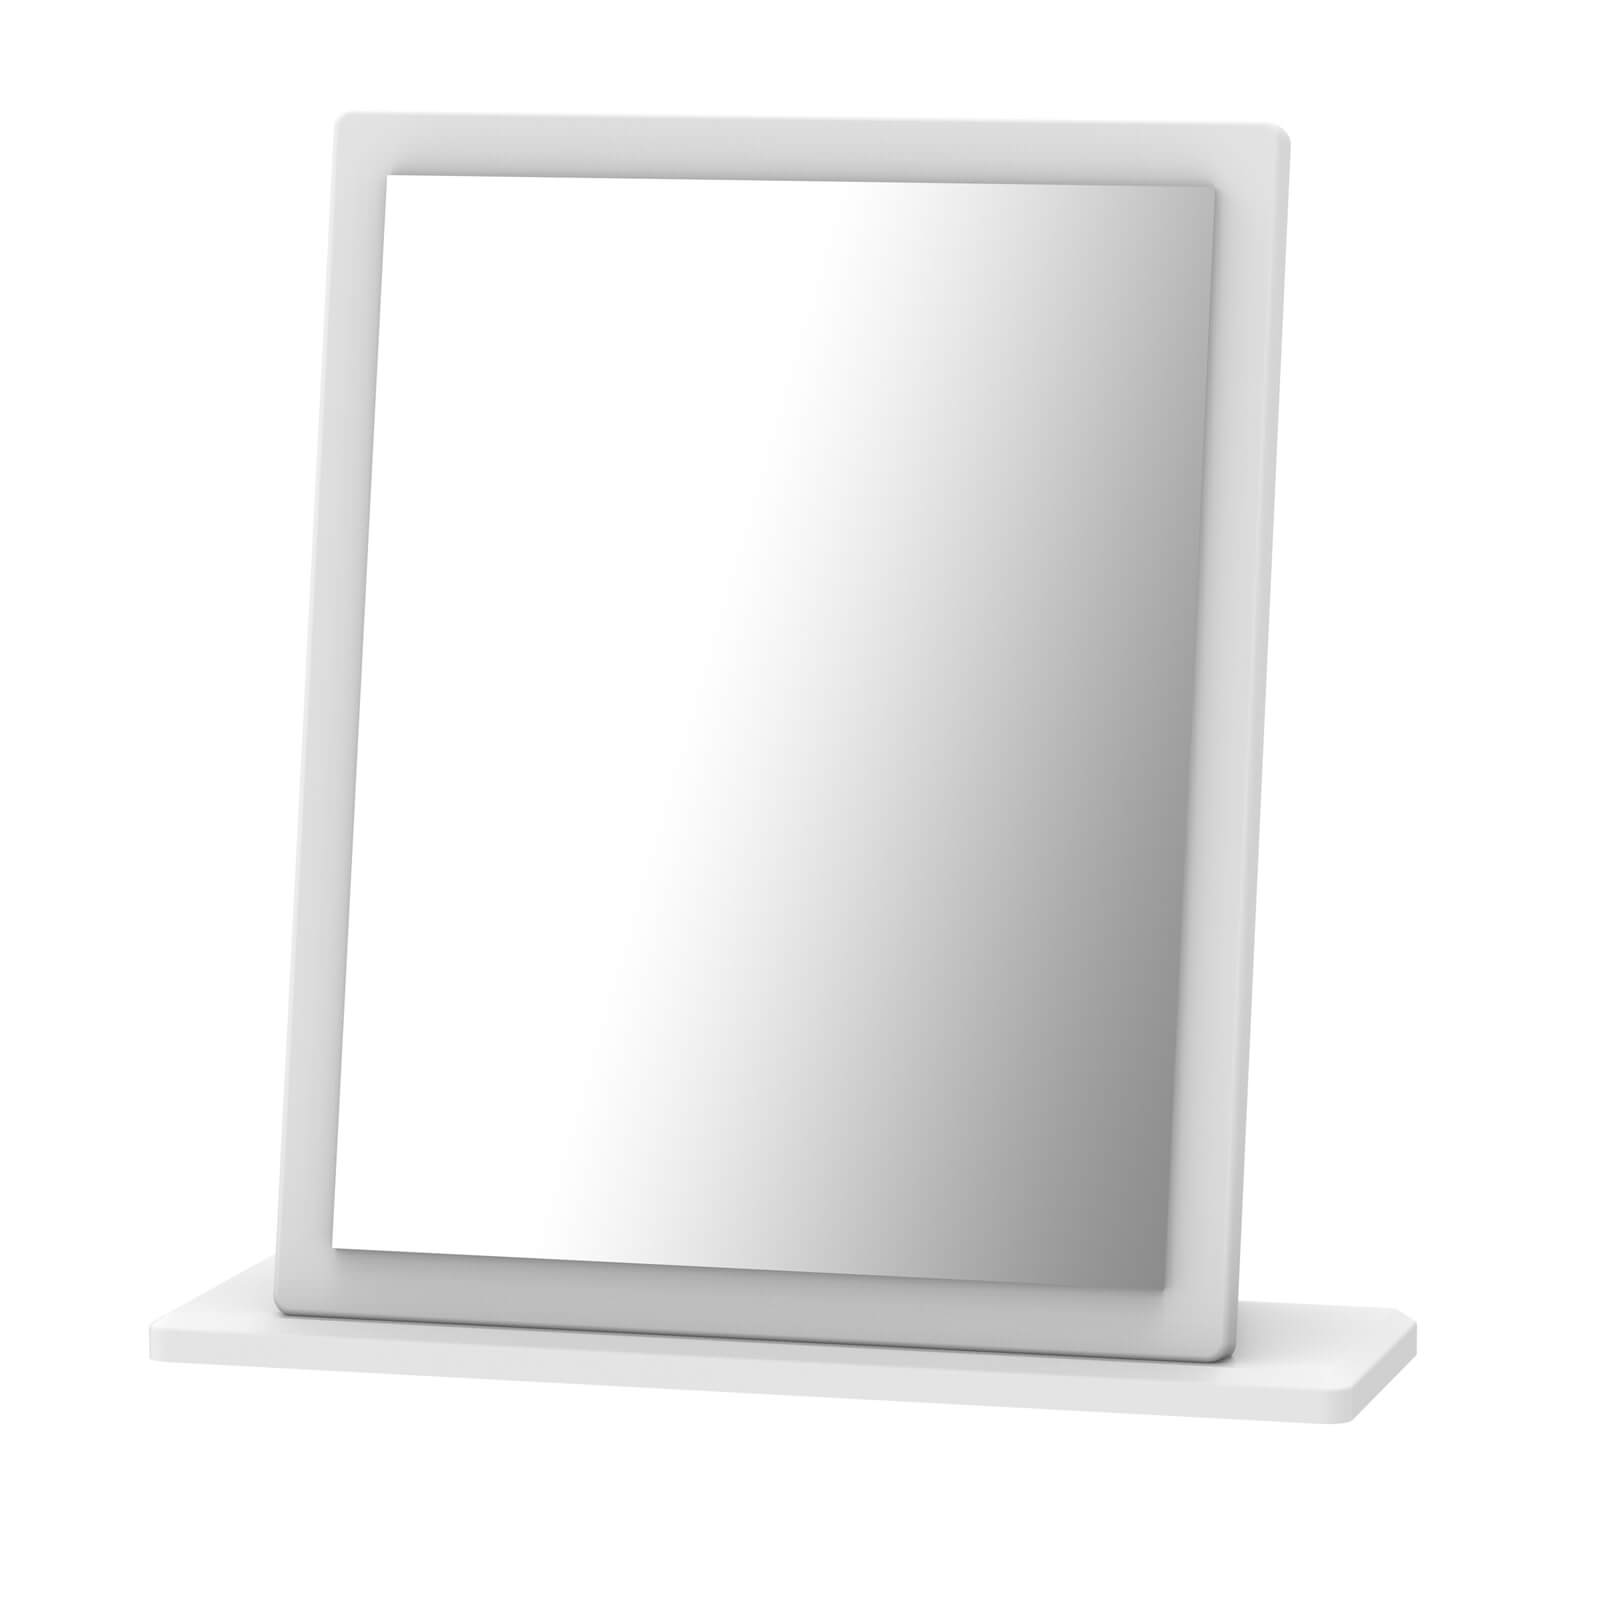 Portofino White Gloss Small Mirror